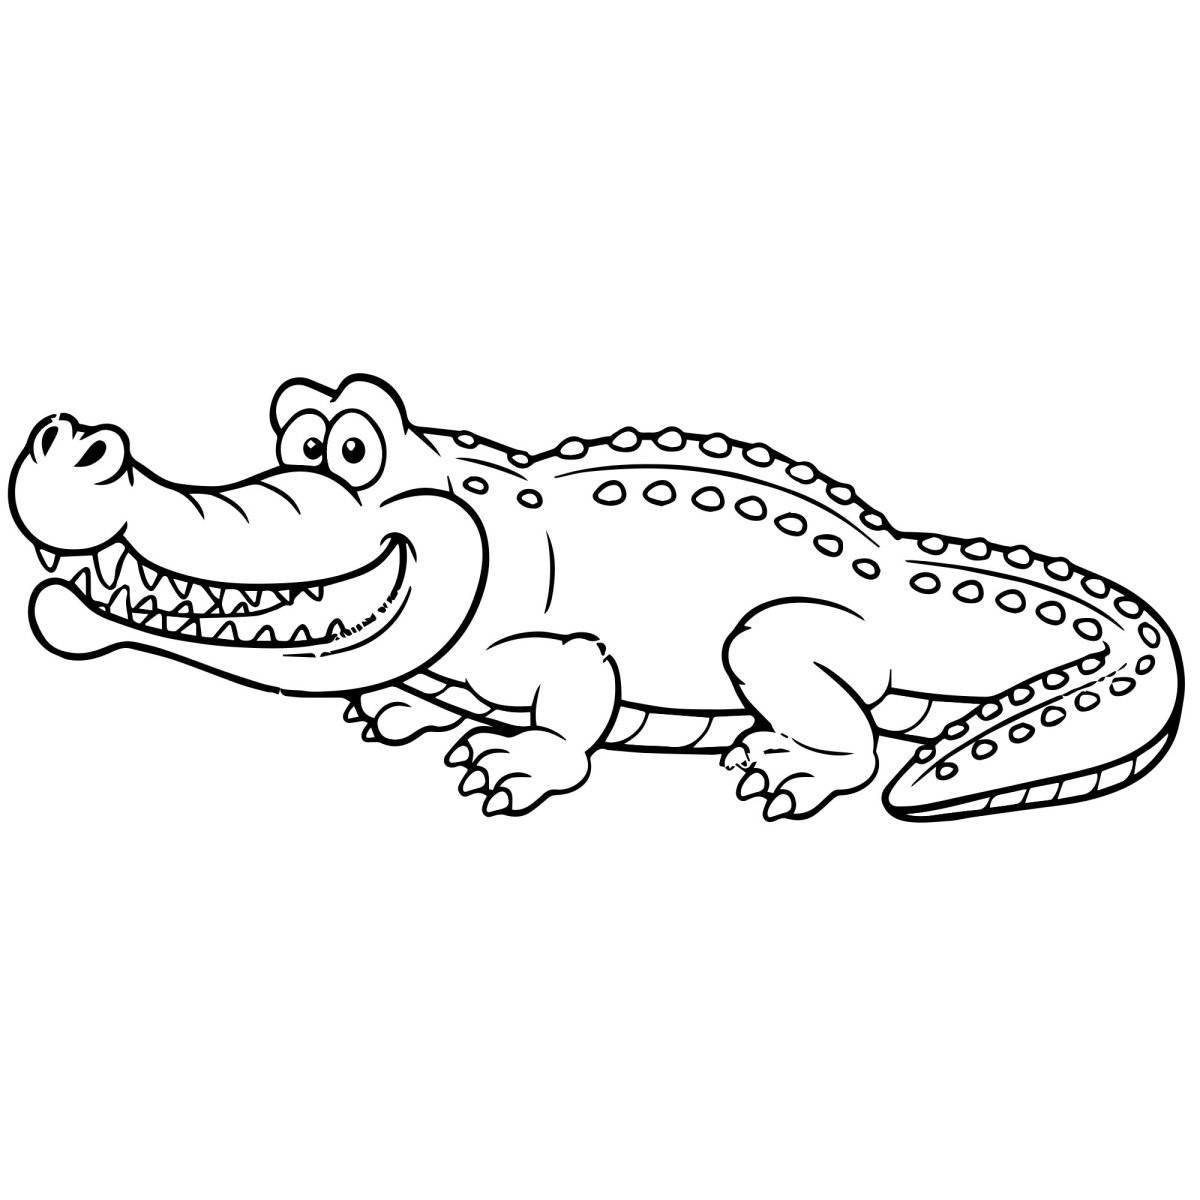 Coloring zani monty the crocodile